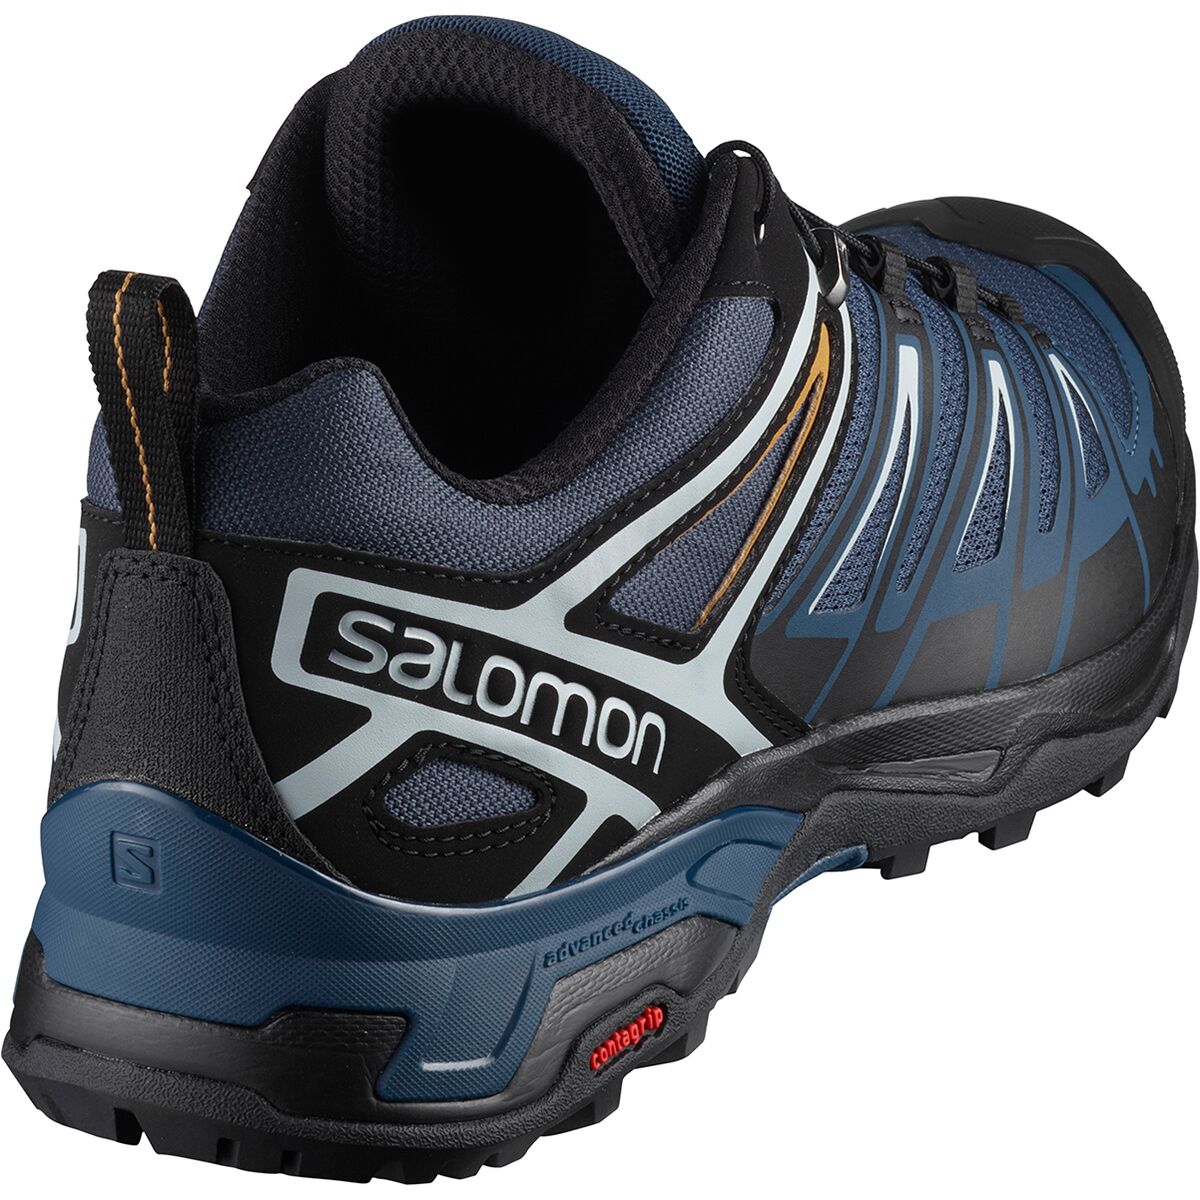 Salomon X 3 Hiking Shoe - Men's